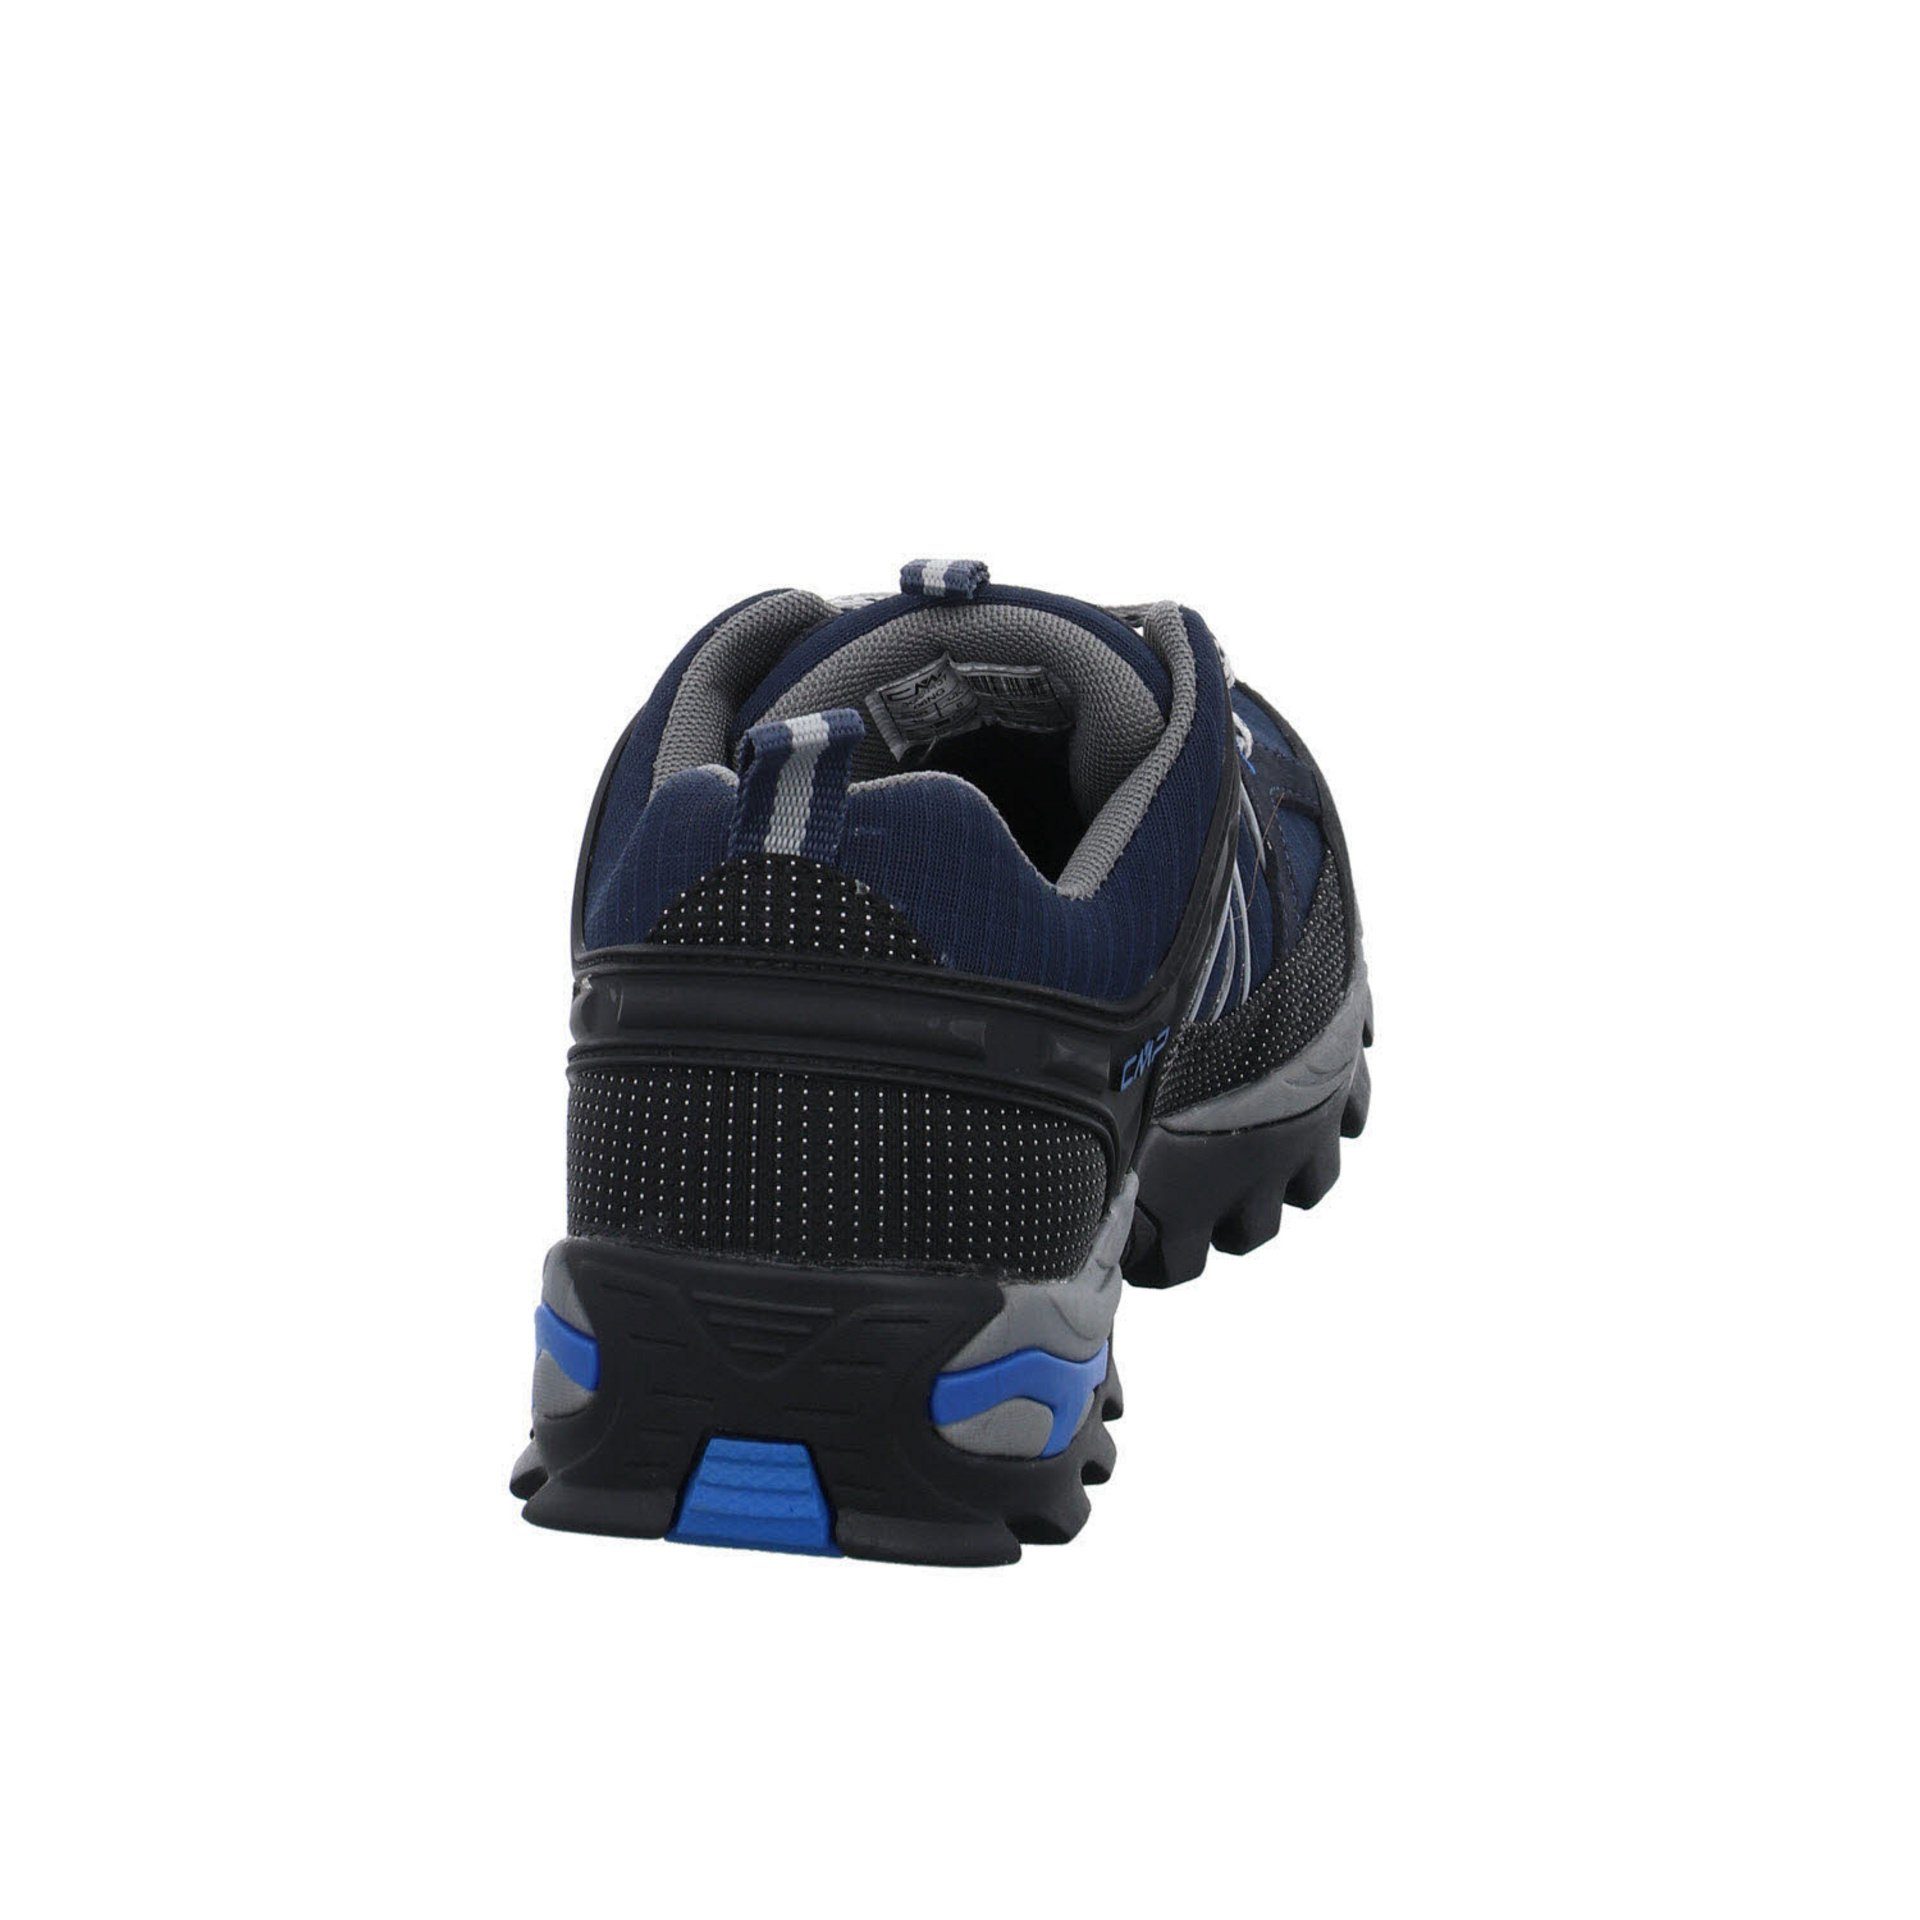 Outdoor Schuhe Outdoorschuh Rigel Herren dunkelblau Low CMP (295) Leder-/Textilkombination Outdoorschuh